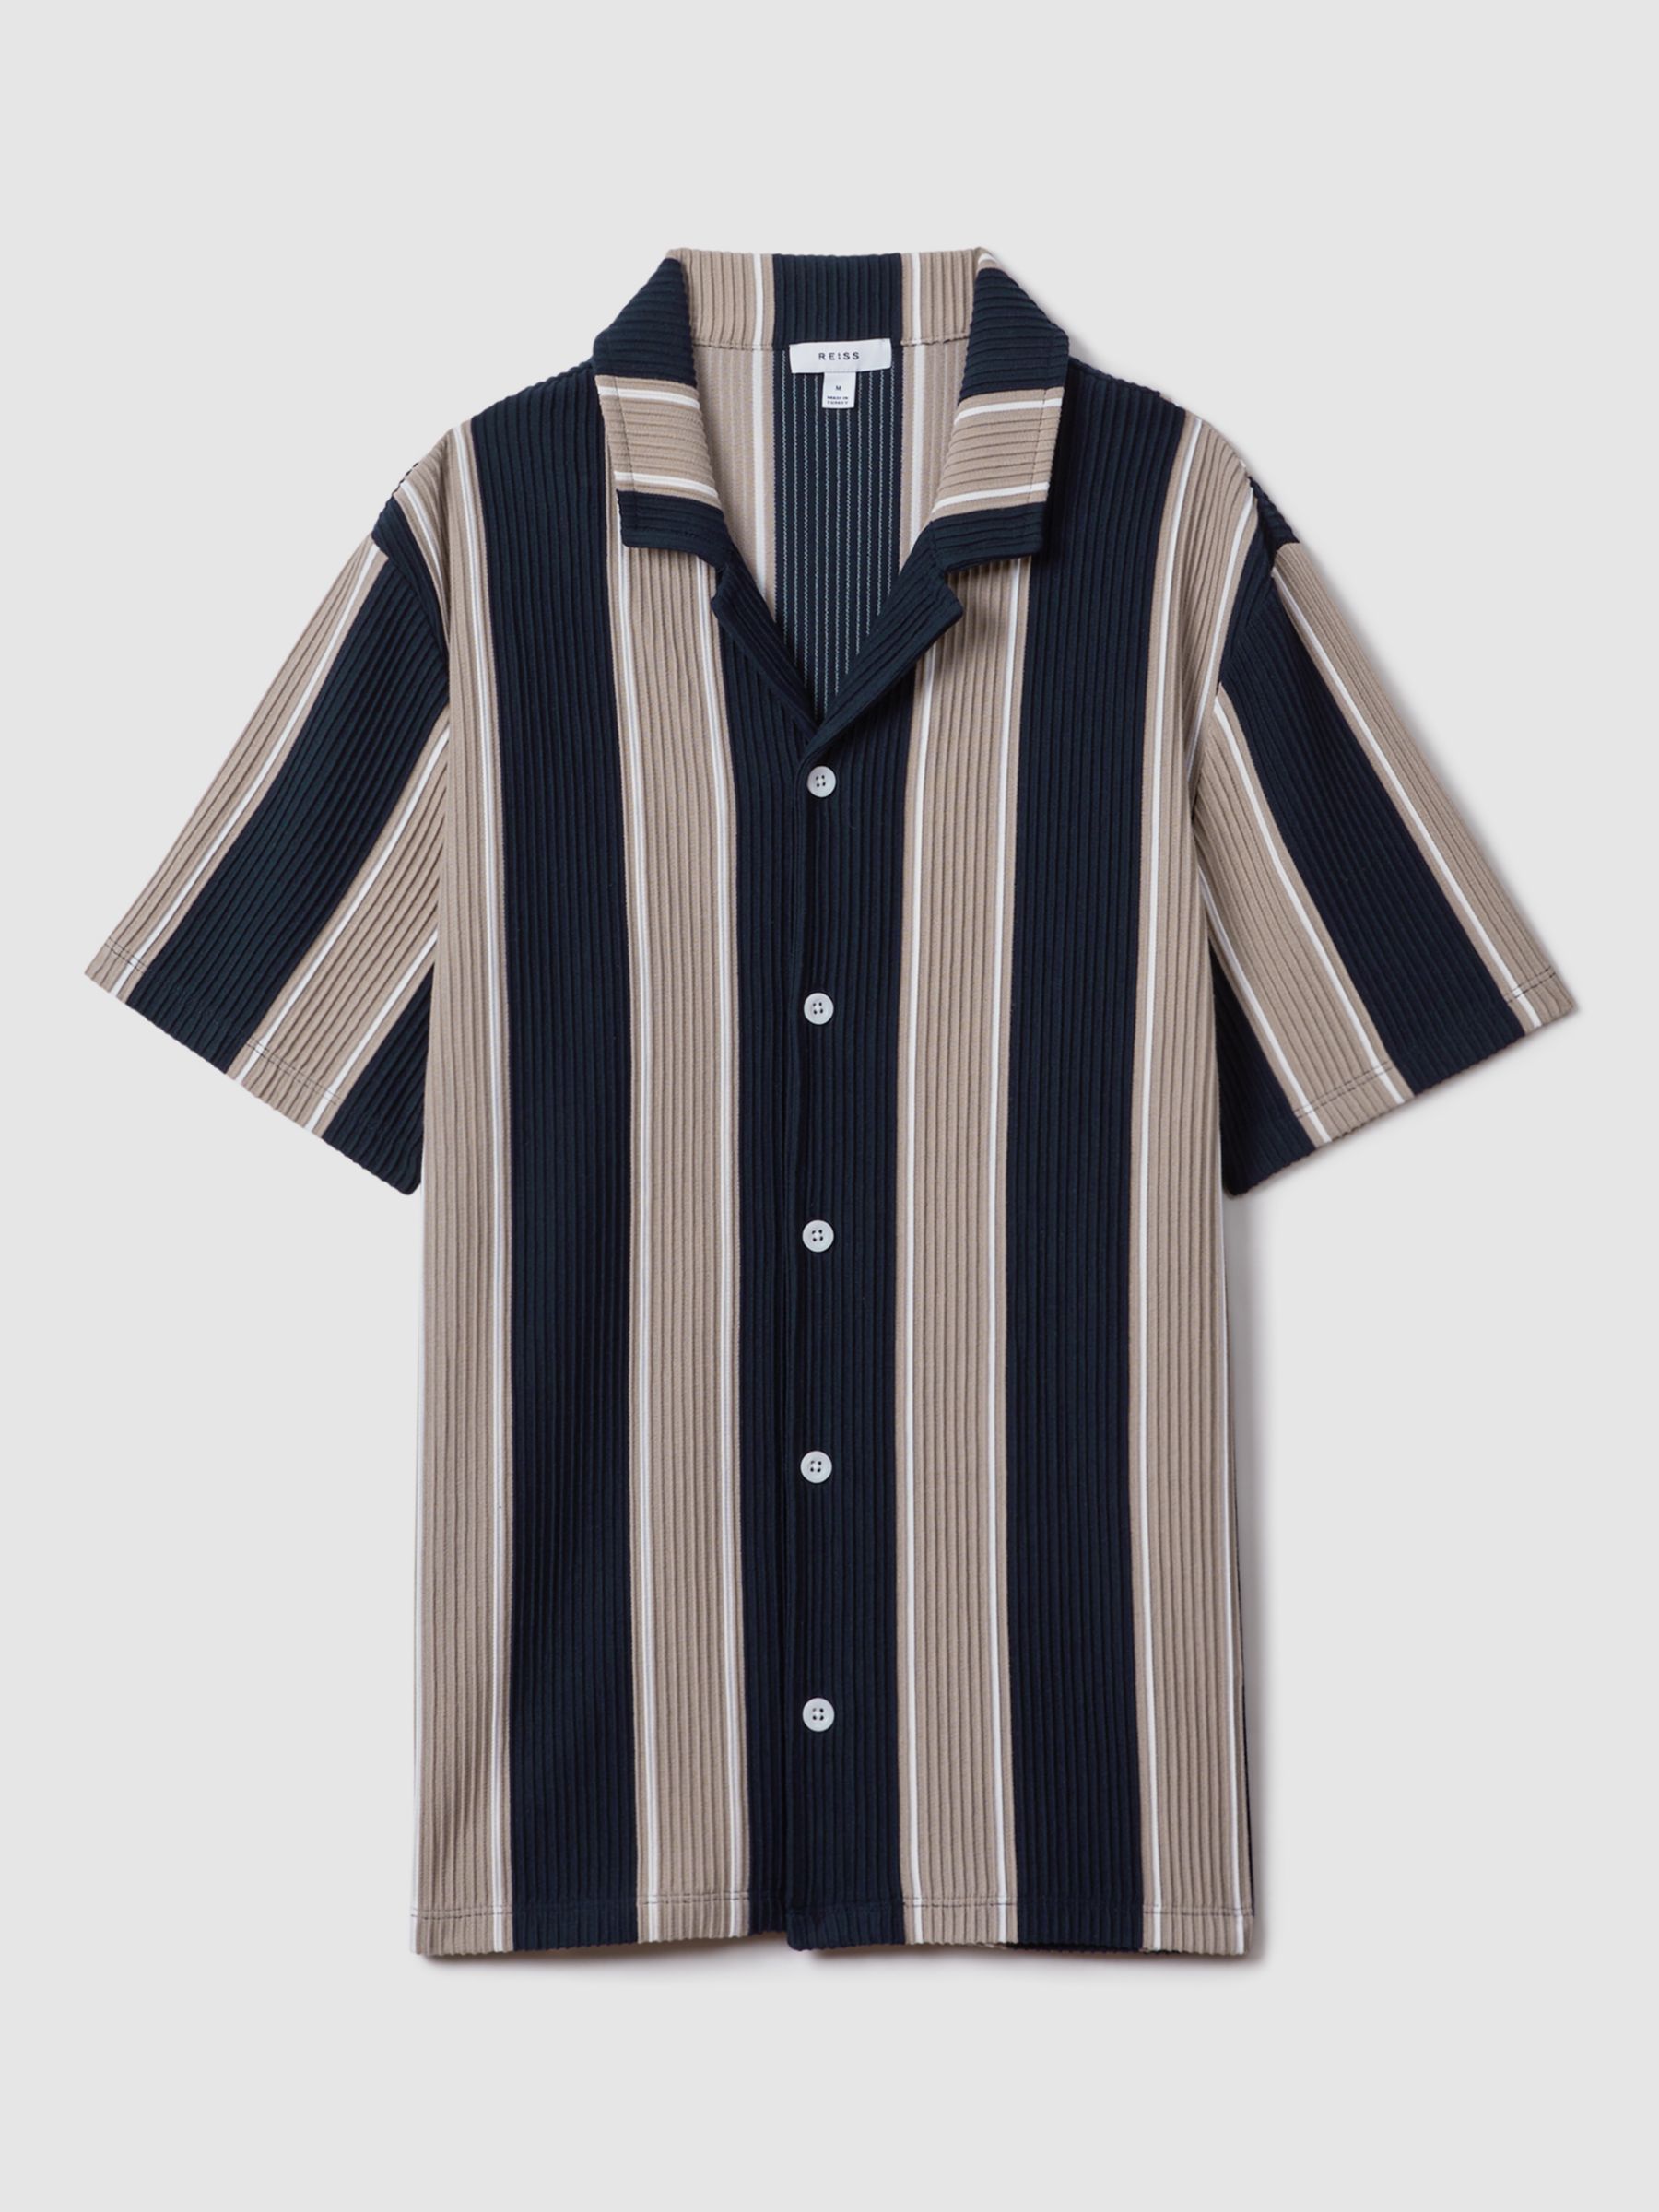 Reiss Alton Short Sleeve Textured Stripe Shirt, Navy/Camel at John ...